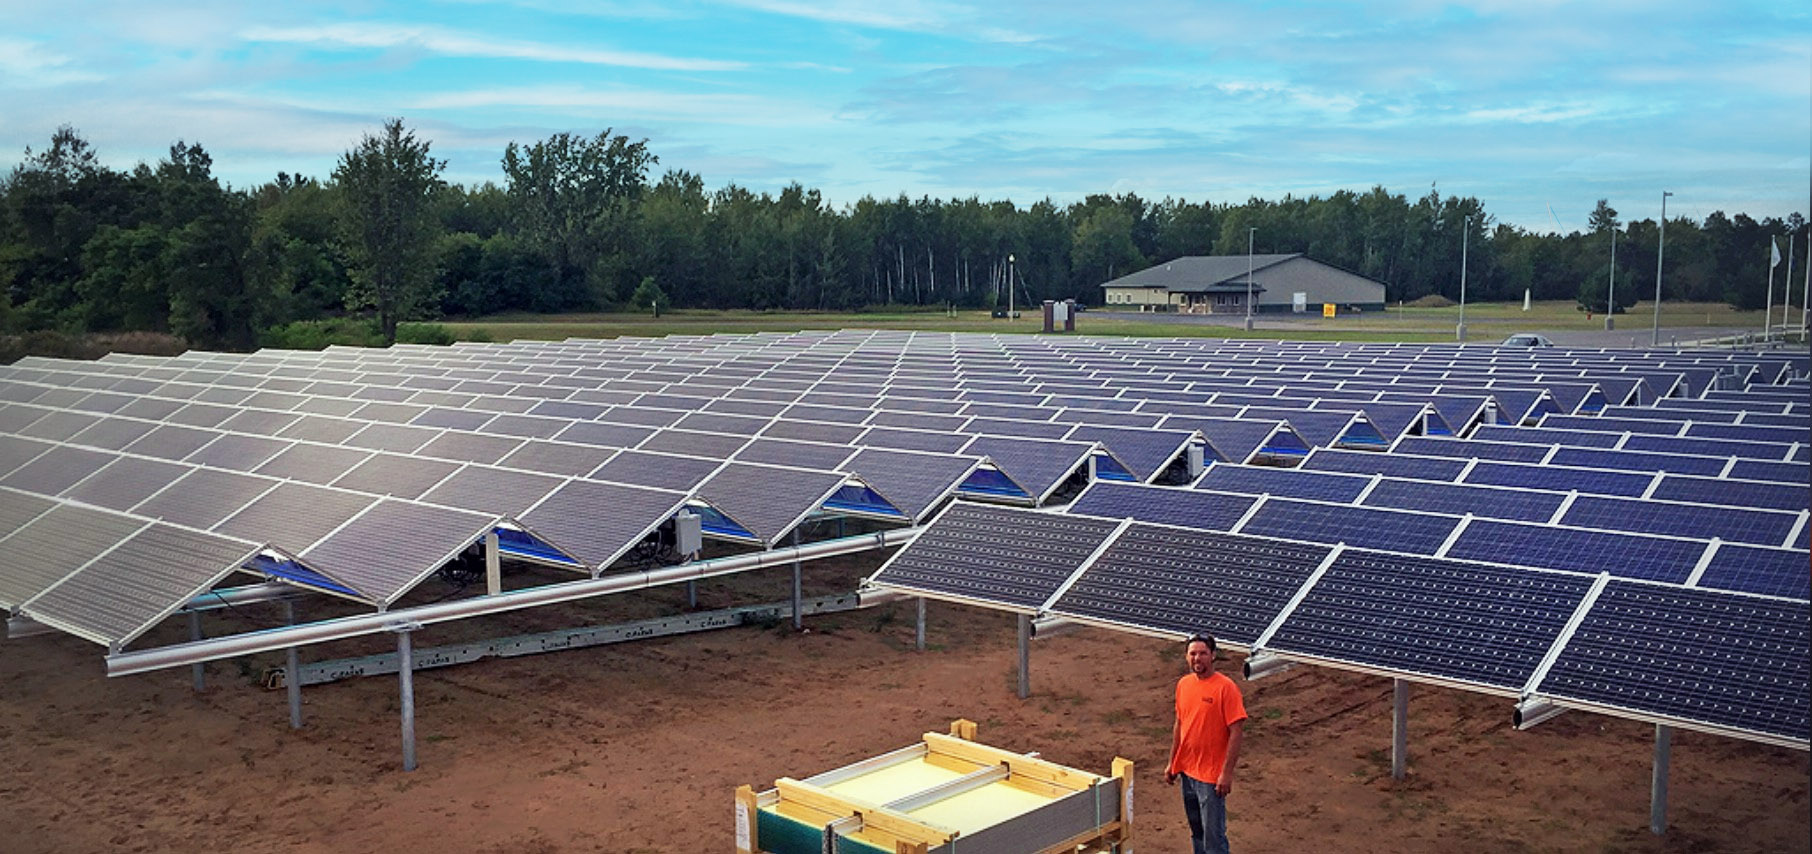 Live Wire Solar Panel Installation in Minnesota